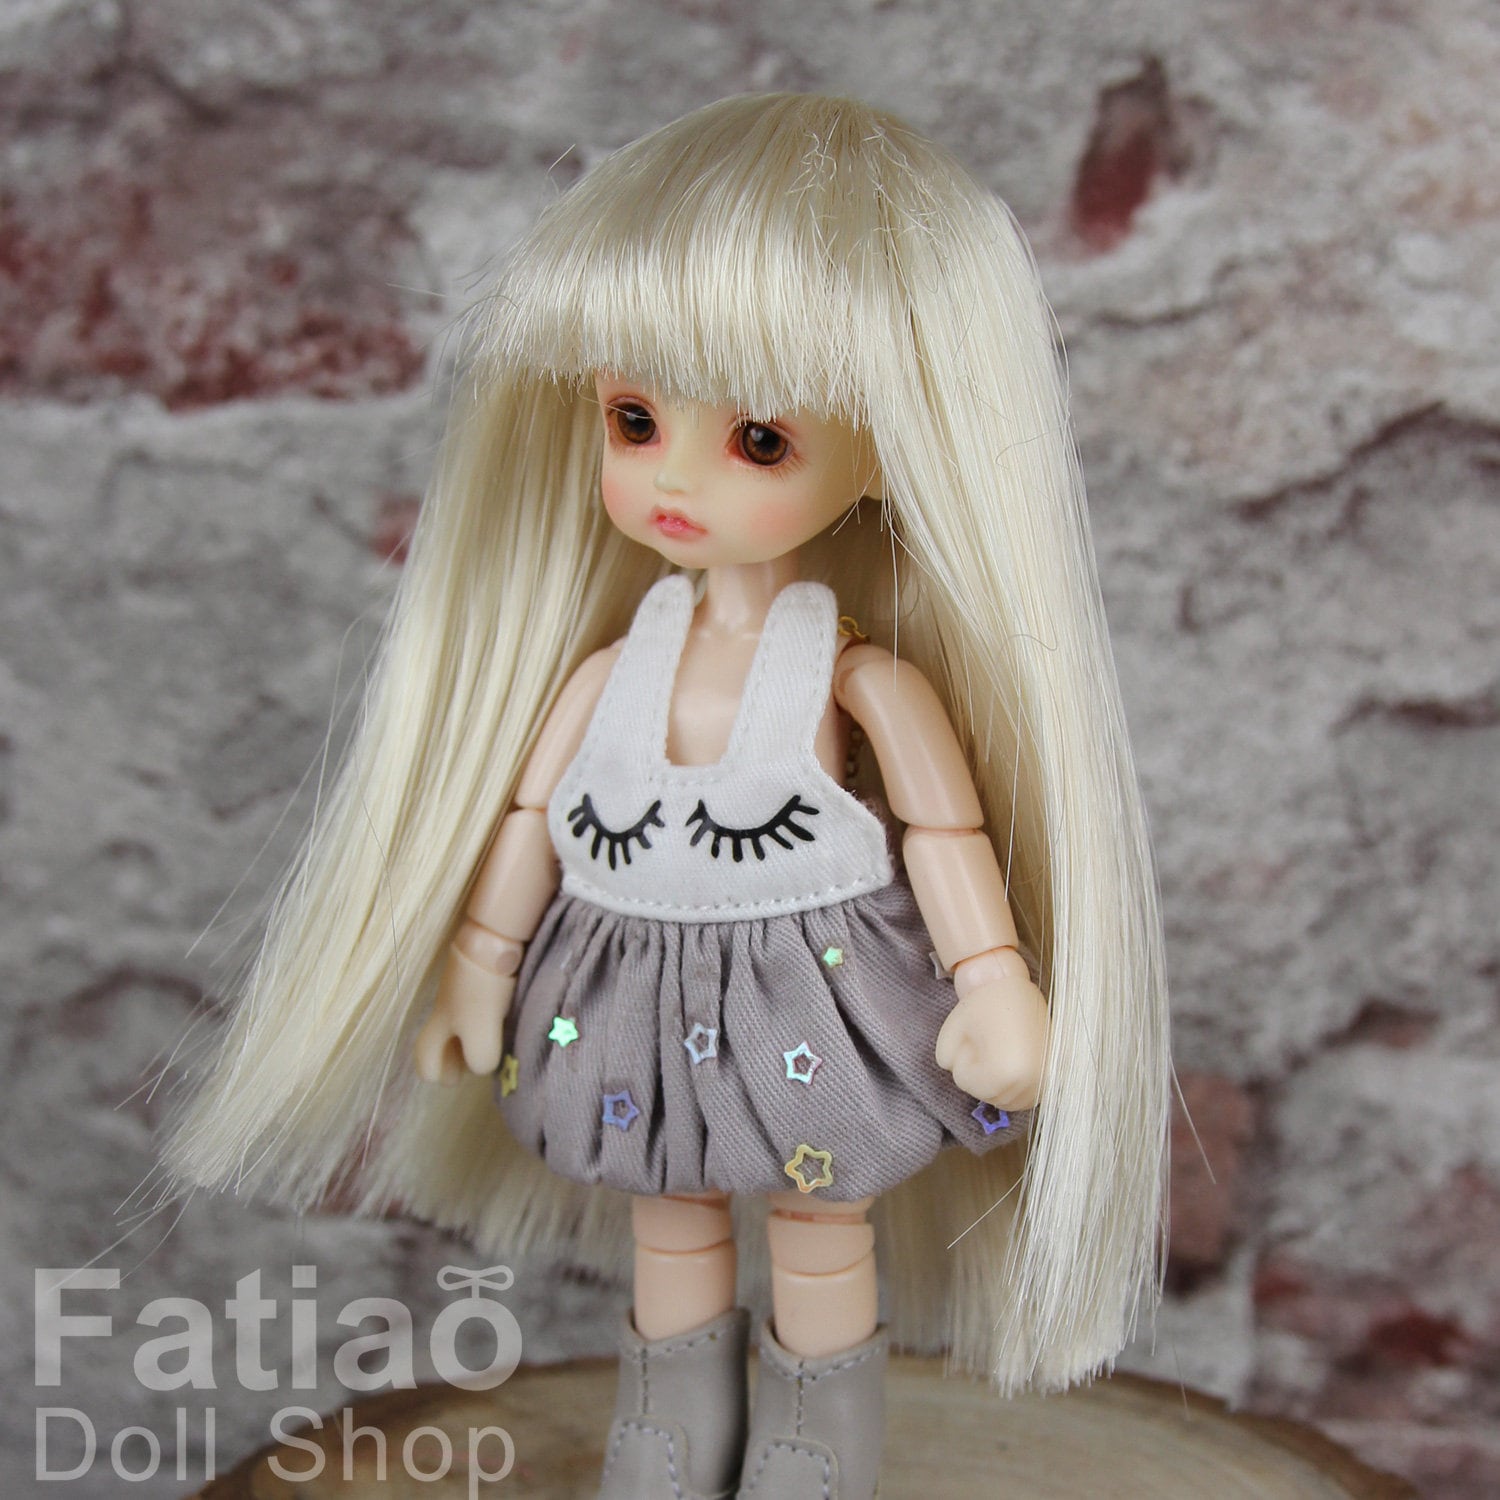 New BJD Dollfie pukipuki brownie 4 Doll Wig Pink & White Fatiao